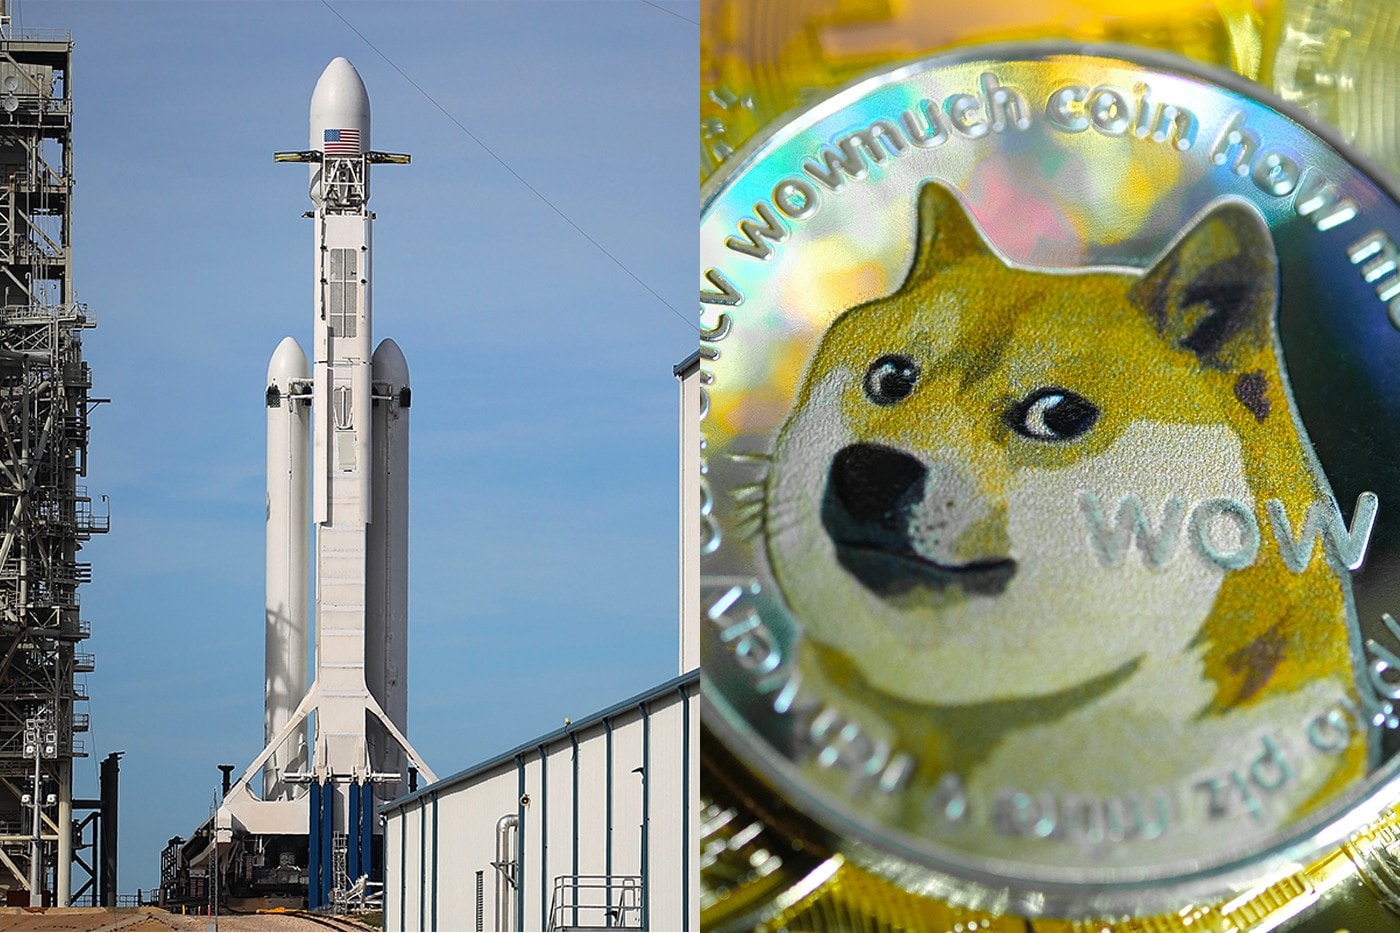 SpaceX Dogecoin Elon Musk Space Art Geometric Energy Corporation (GEC) DOGE-1 Mission Moon Outerspace CubeSat Launch 